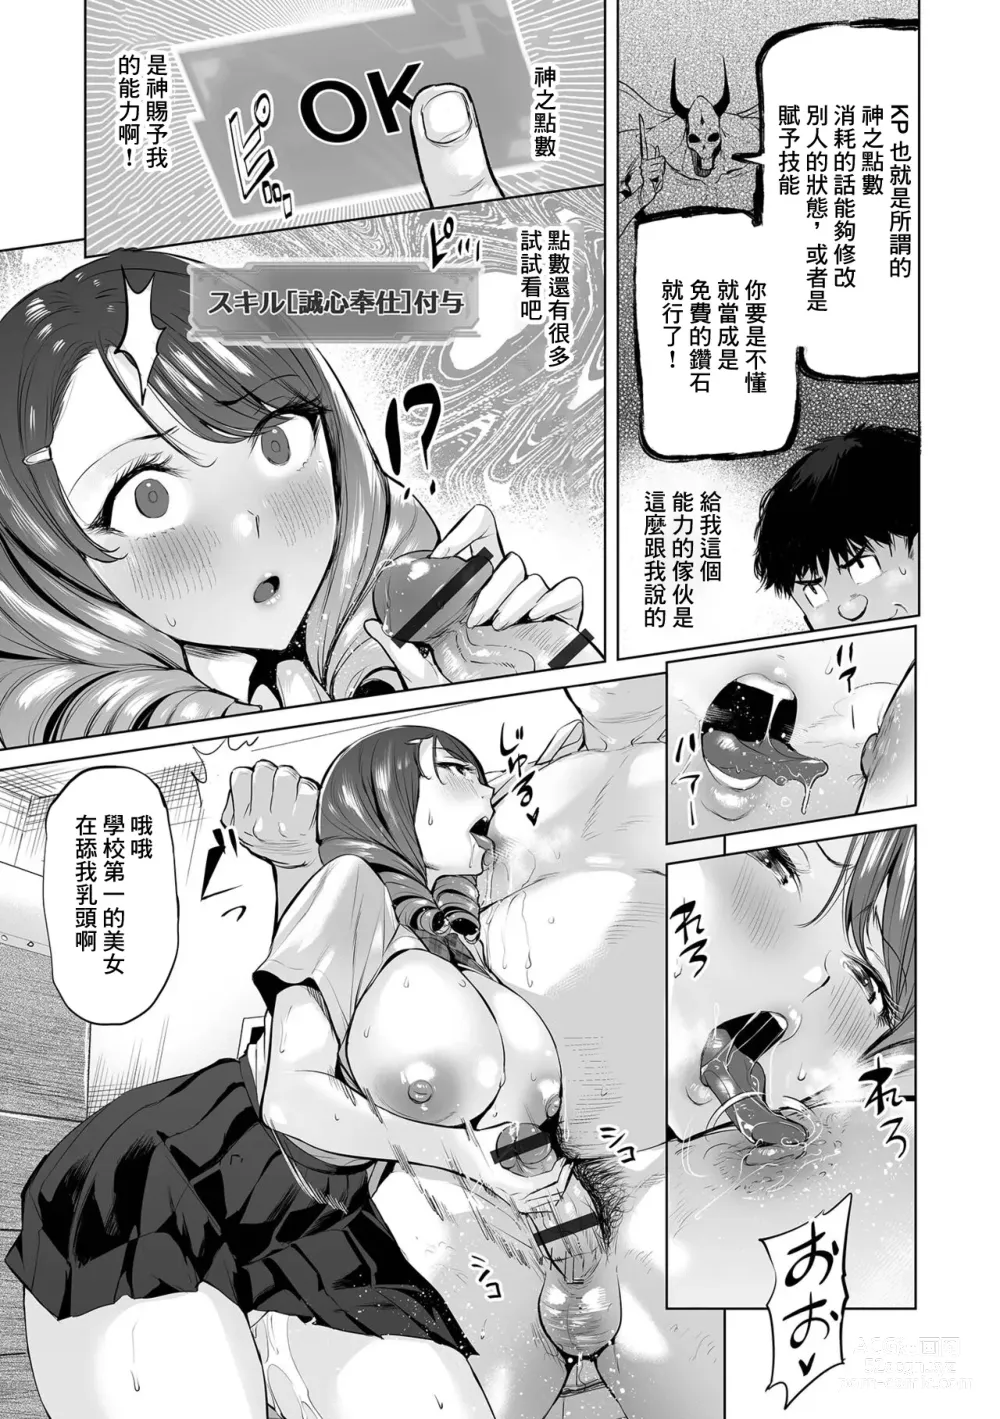 Page 5 of manga Ijire! Ero Status